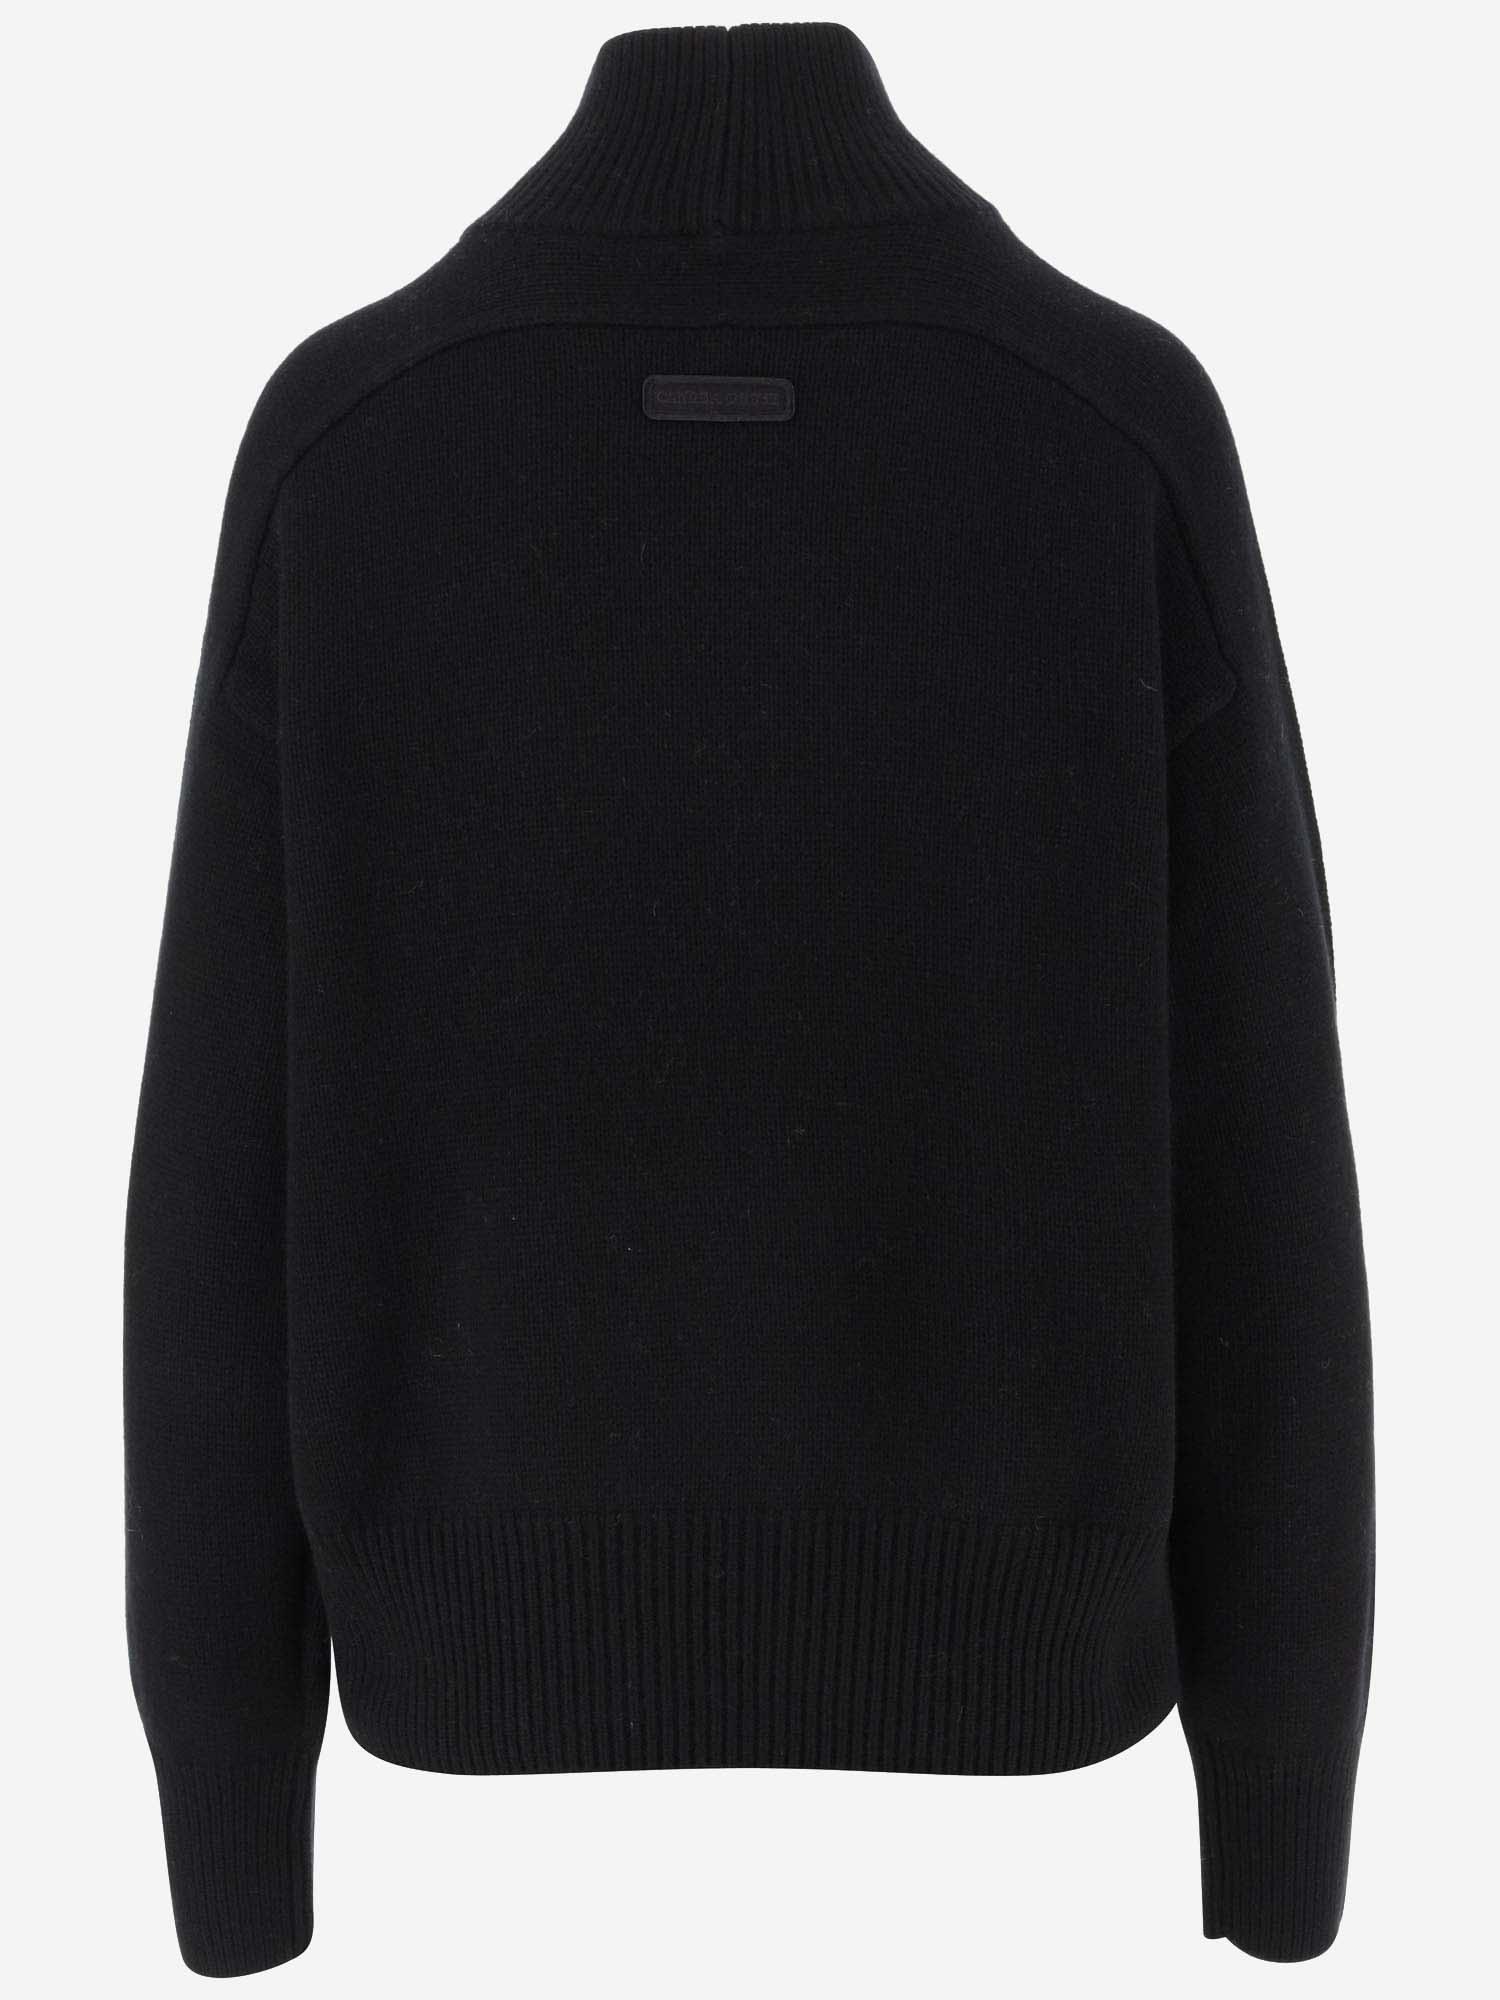 Canada Goose Merino Wool Sweater in Black | Lyst